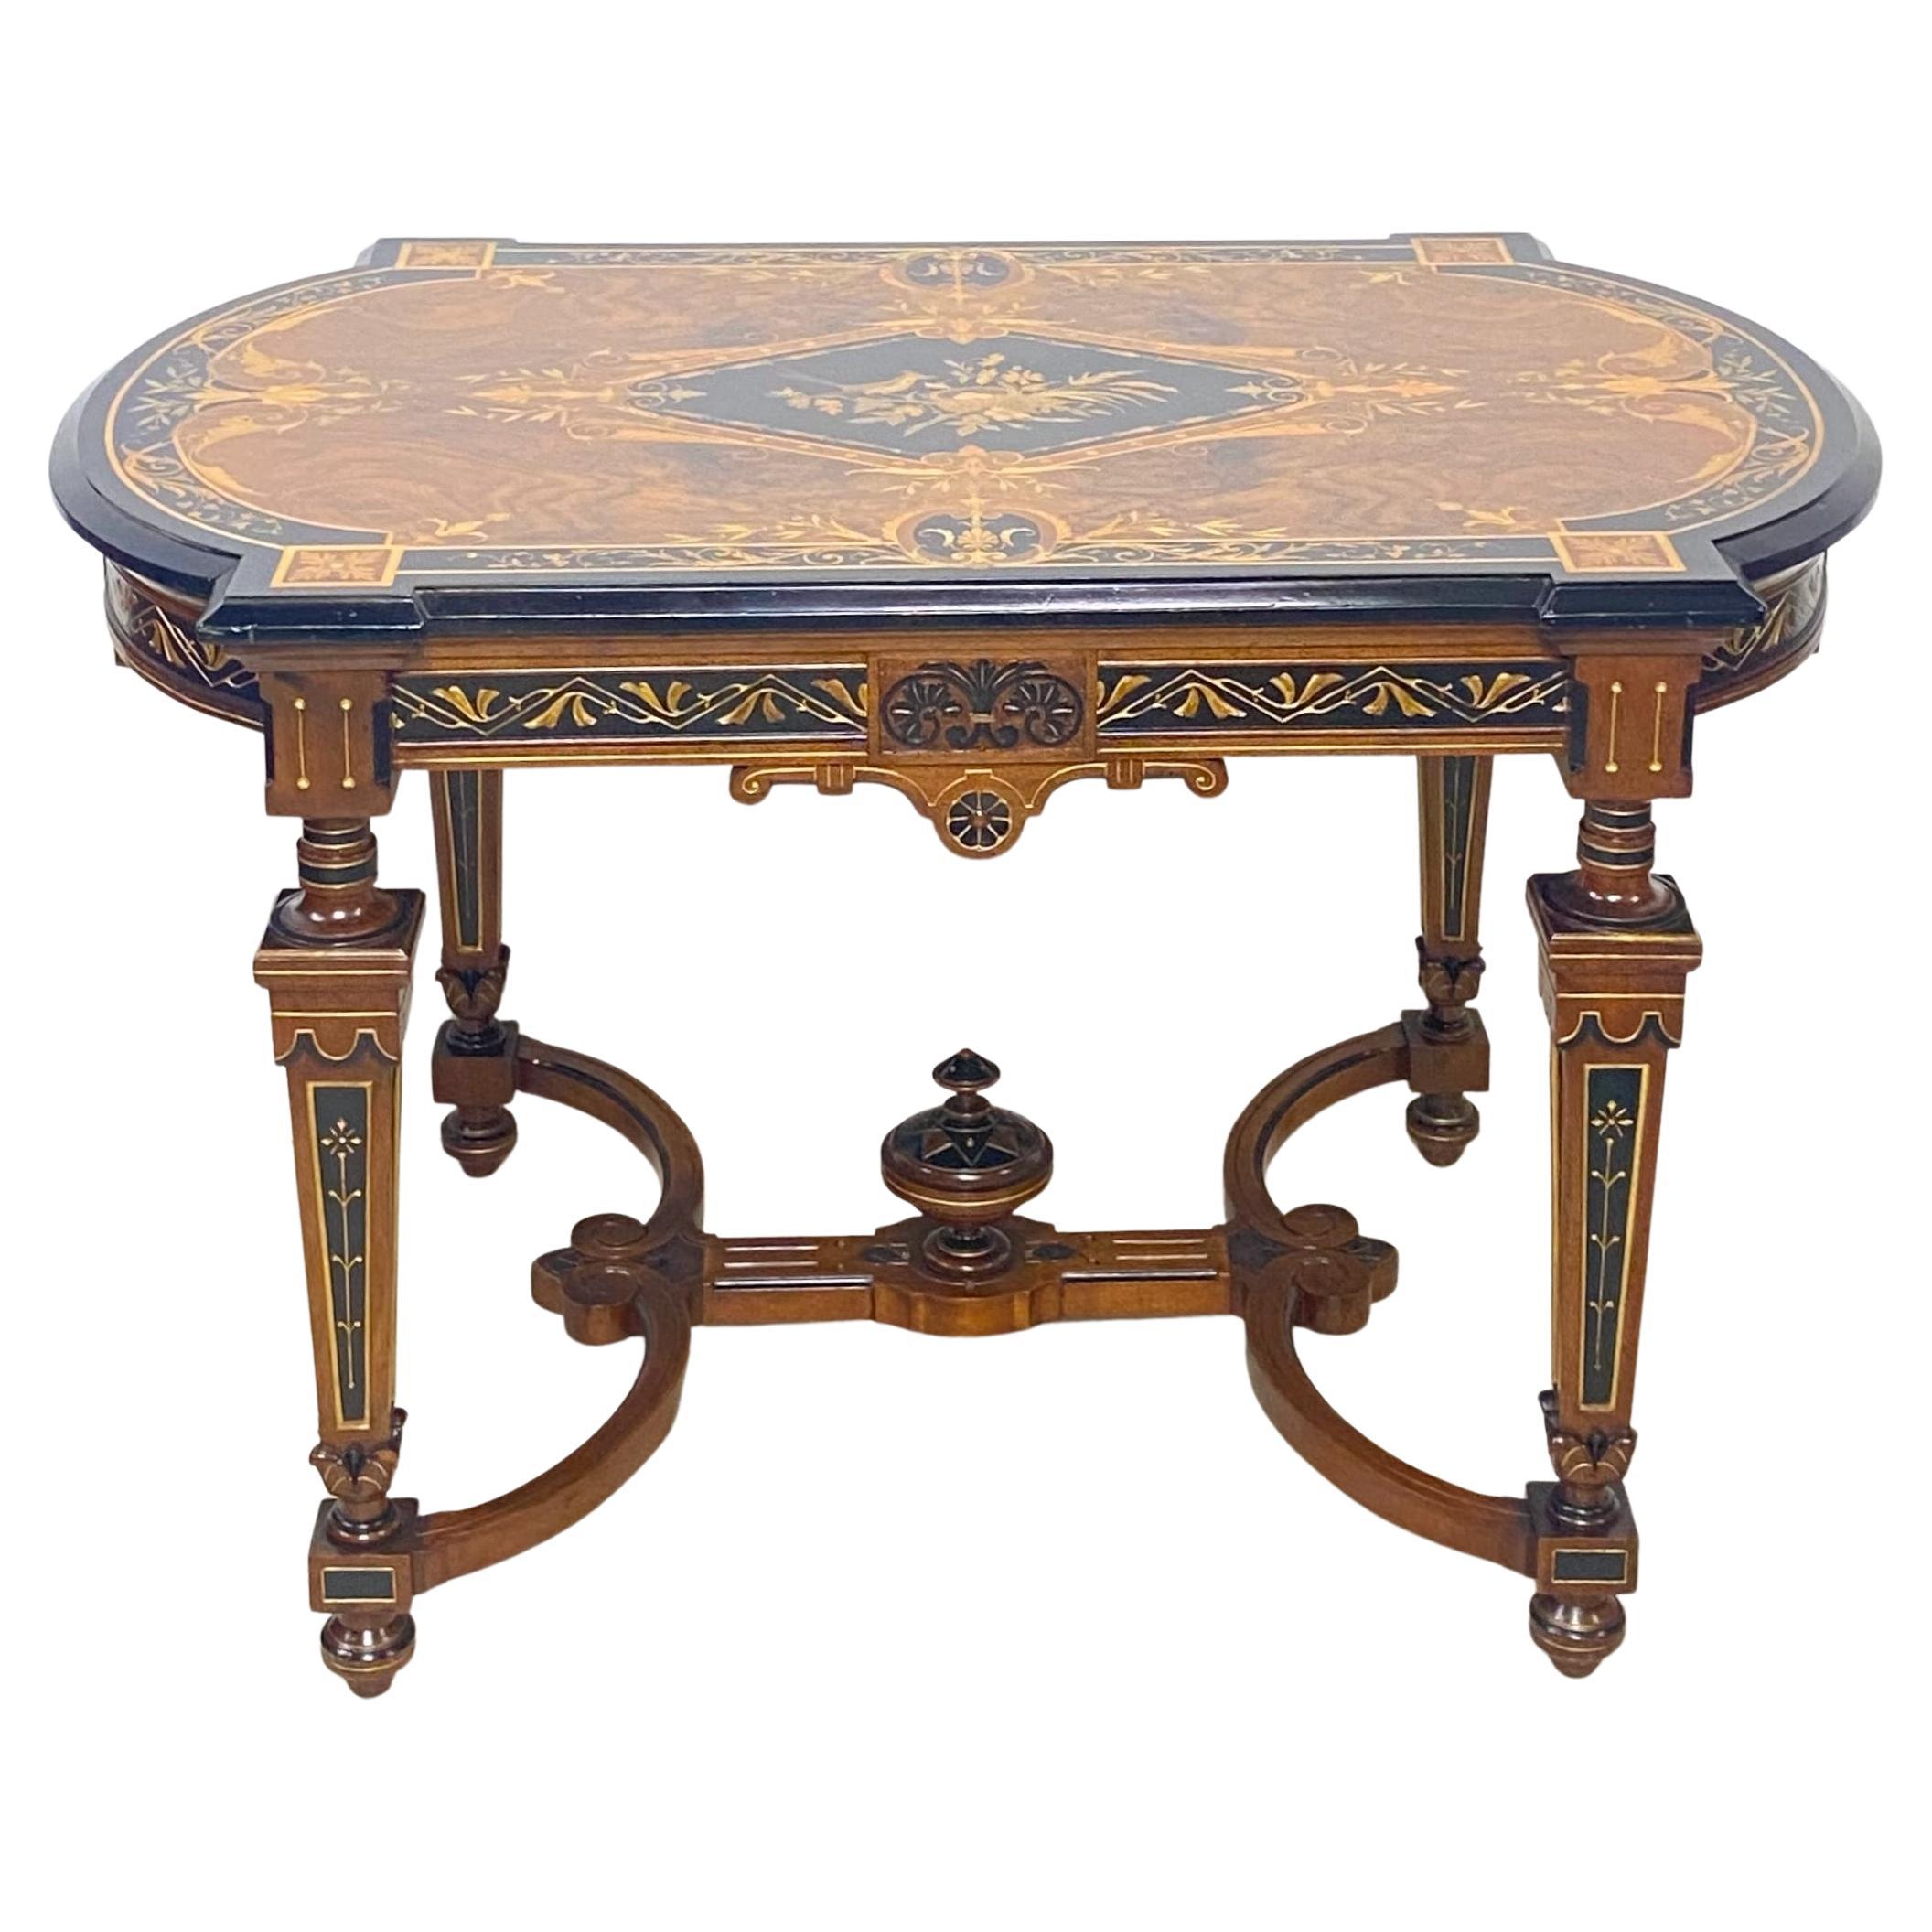 Herter Bros. américain victorien Table centrale de style, fin du 19e siècle en vente